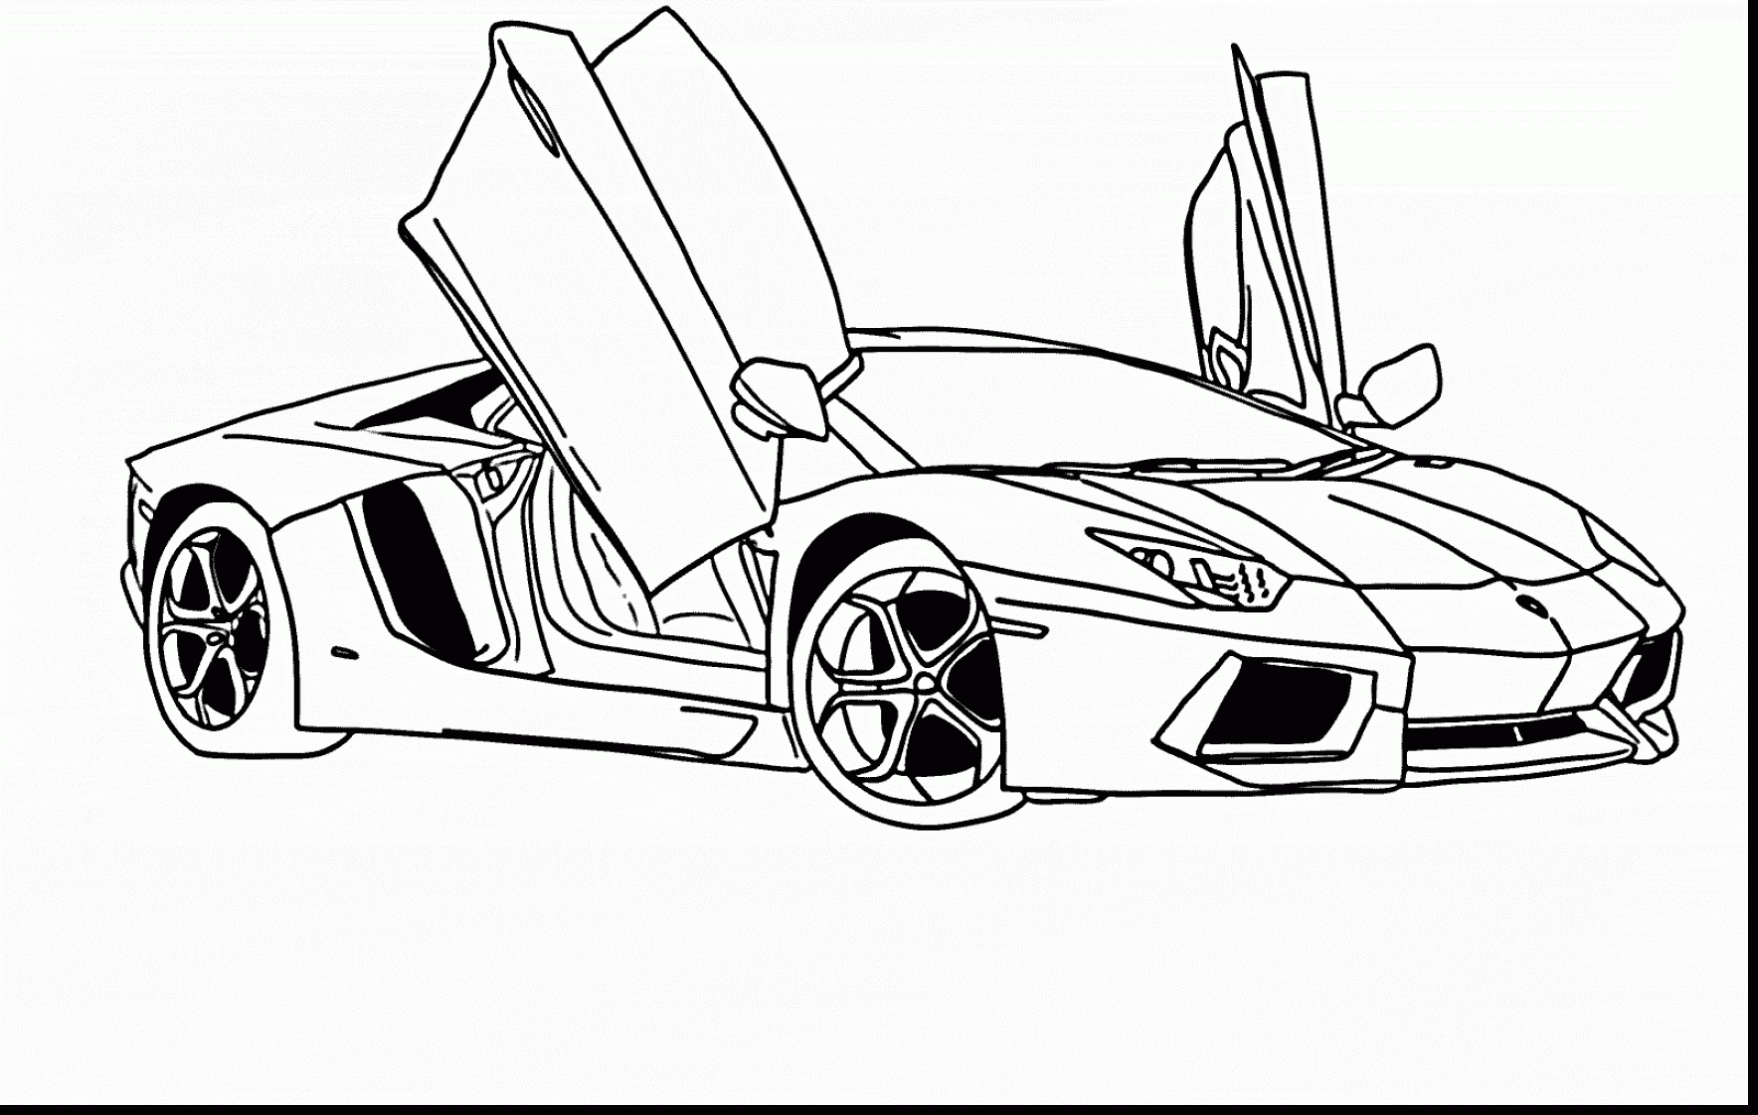 Lamborghini centenario car icon flat symmetric black white front view sketch  Vectors graphic art designs in editable .ai .eps .svg .cdr format free and  easy download unlimit id:6925997